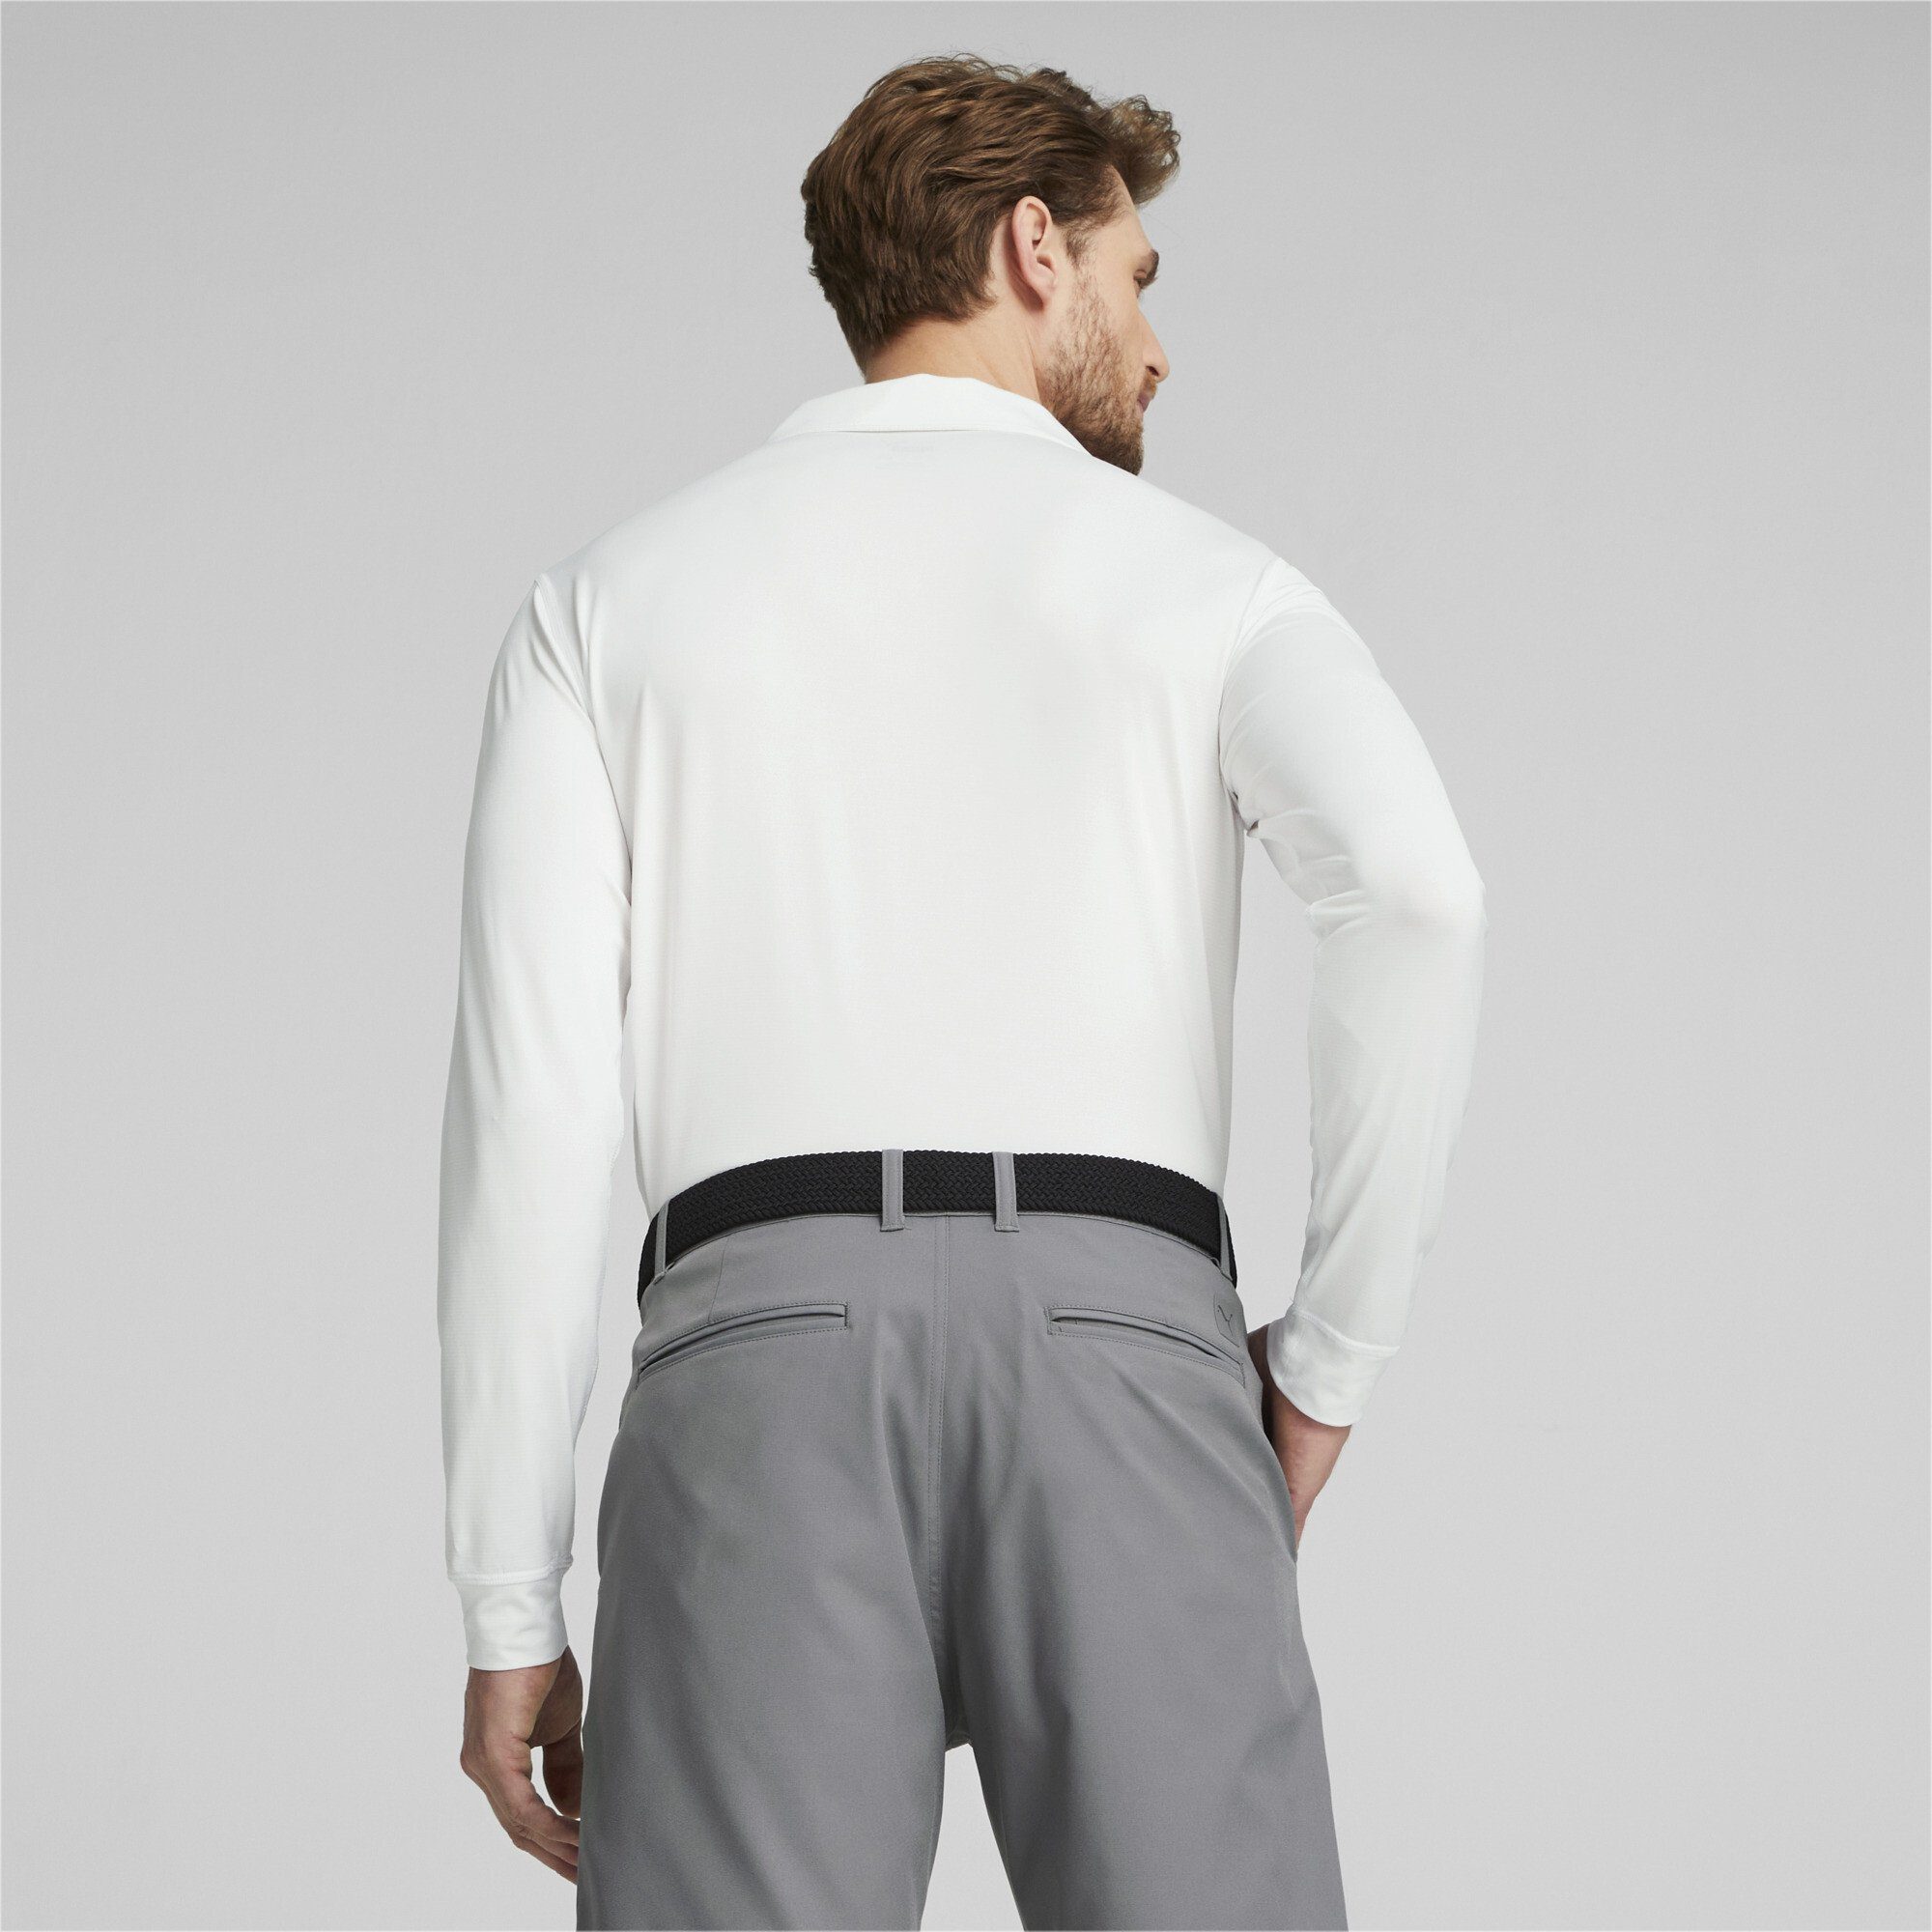 YouV White Golfpolo Herren Sleeve Bright PUMA Long Poloshirt